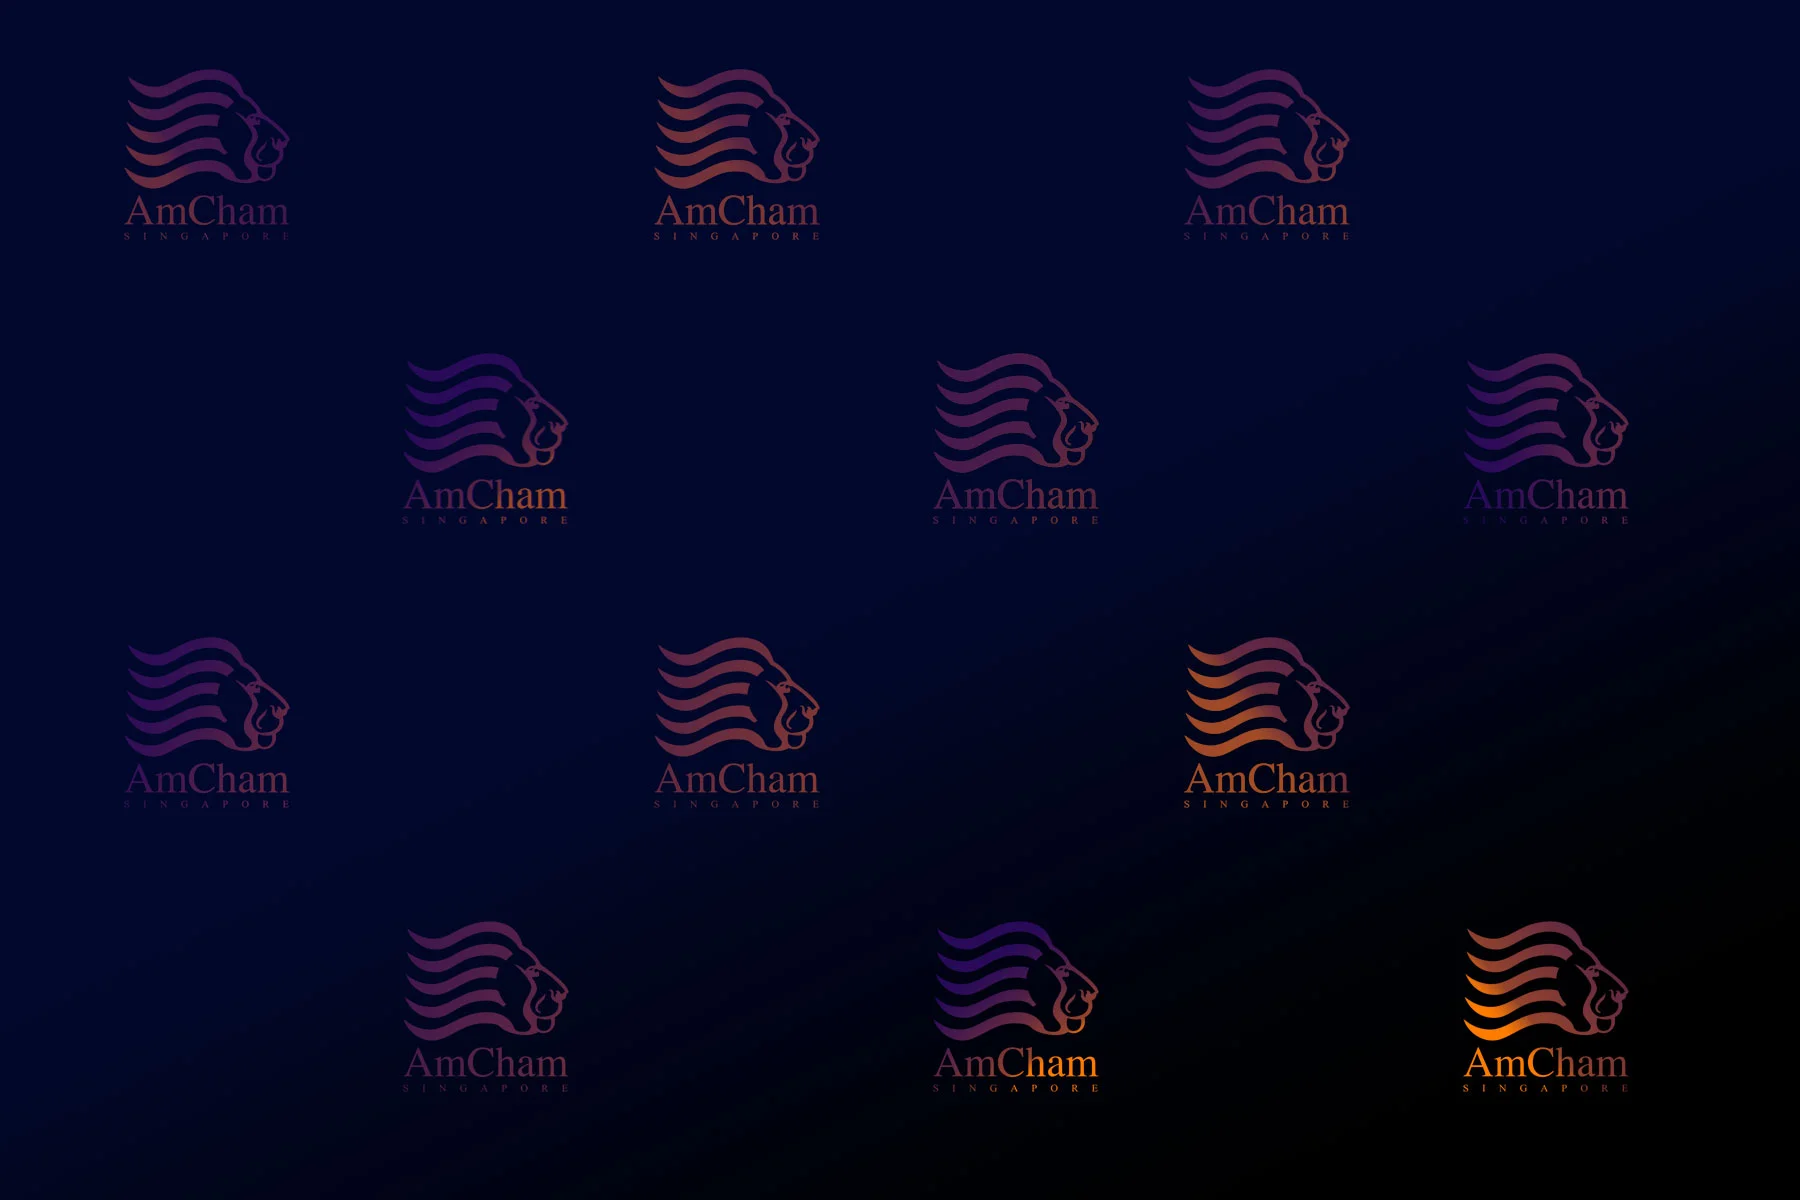 Amcham Singapore - A platform for Global Business Leaders